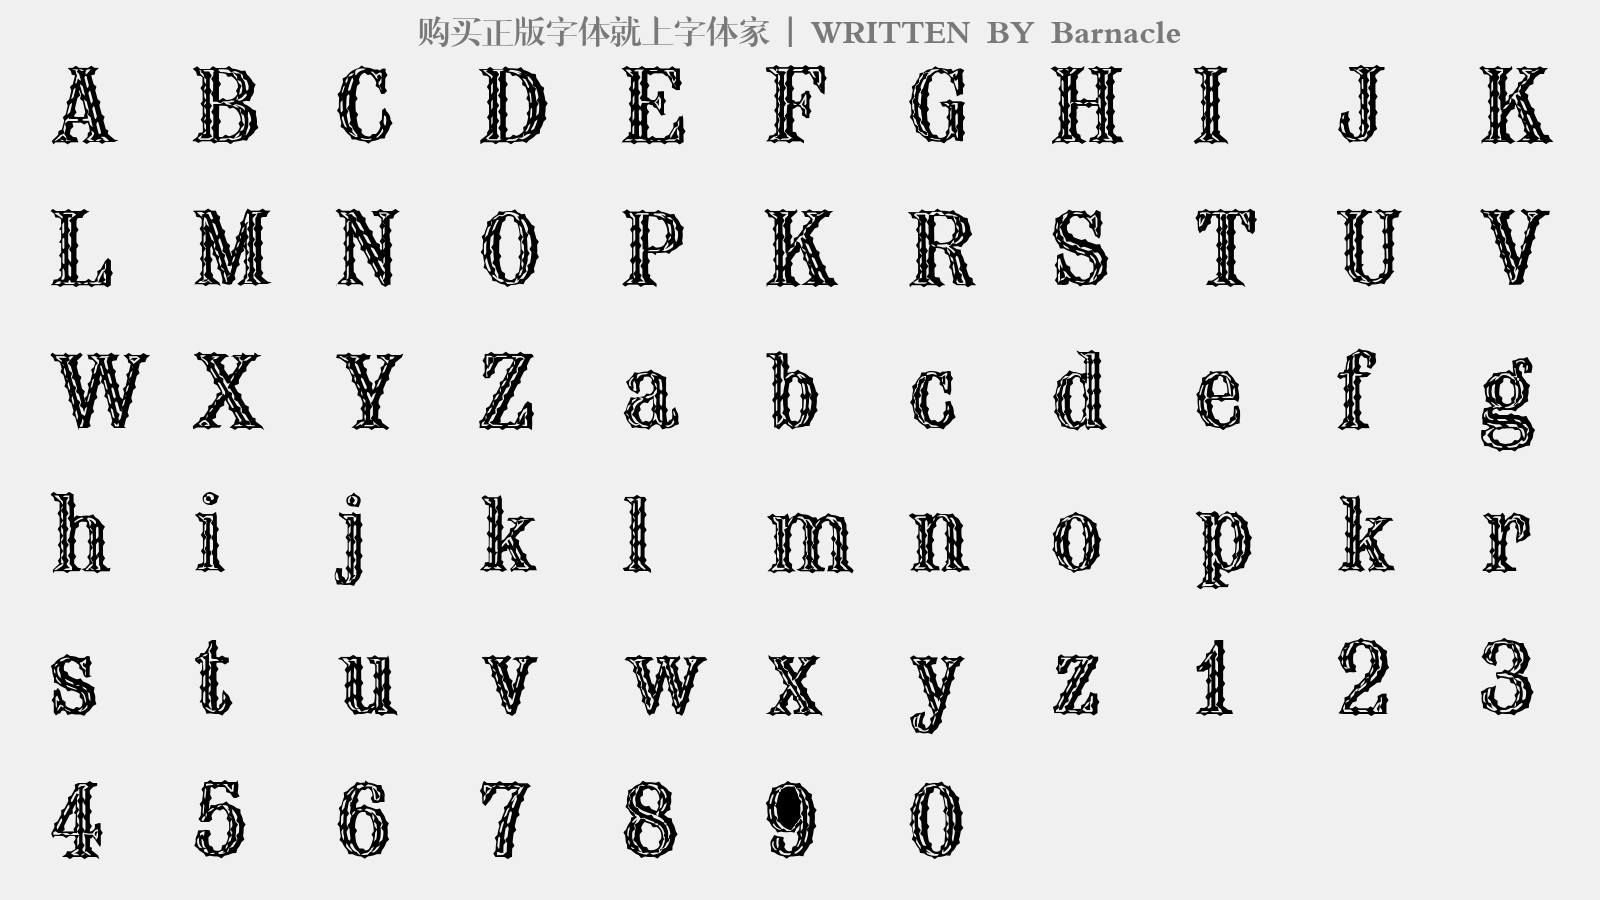 Barnacle - 大写字母/小写字母/数字